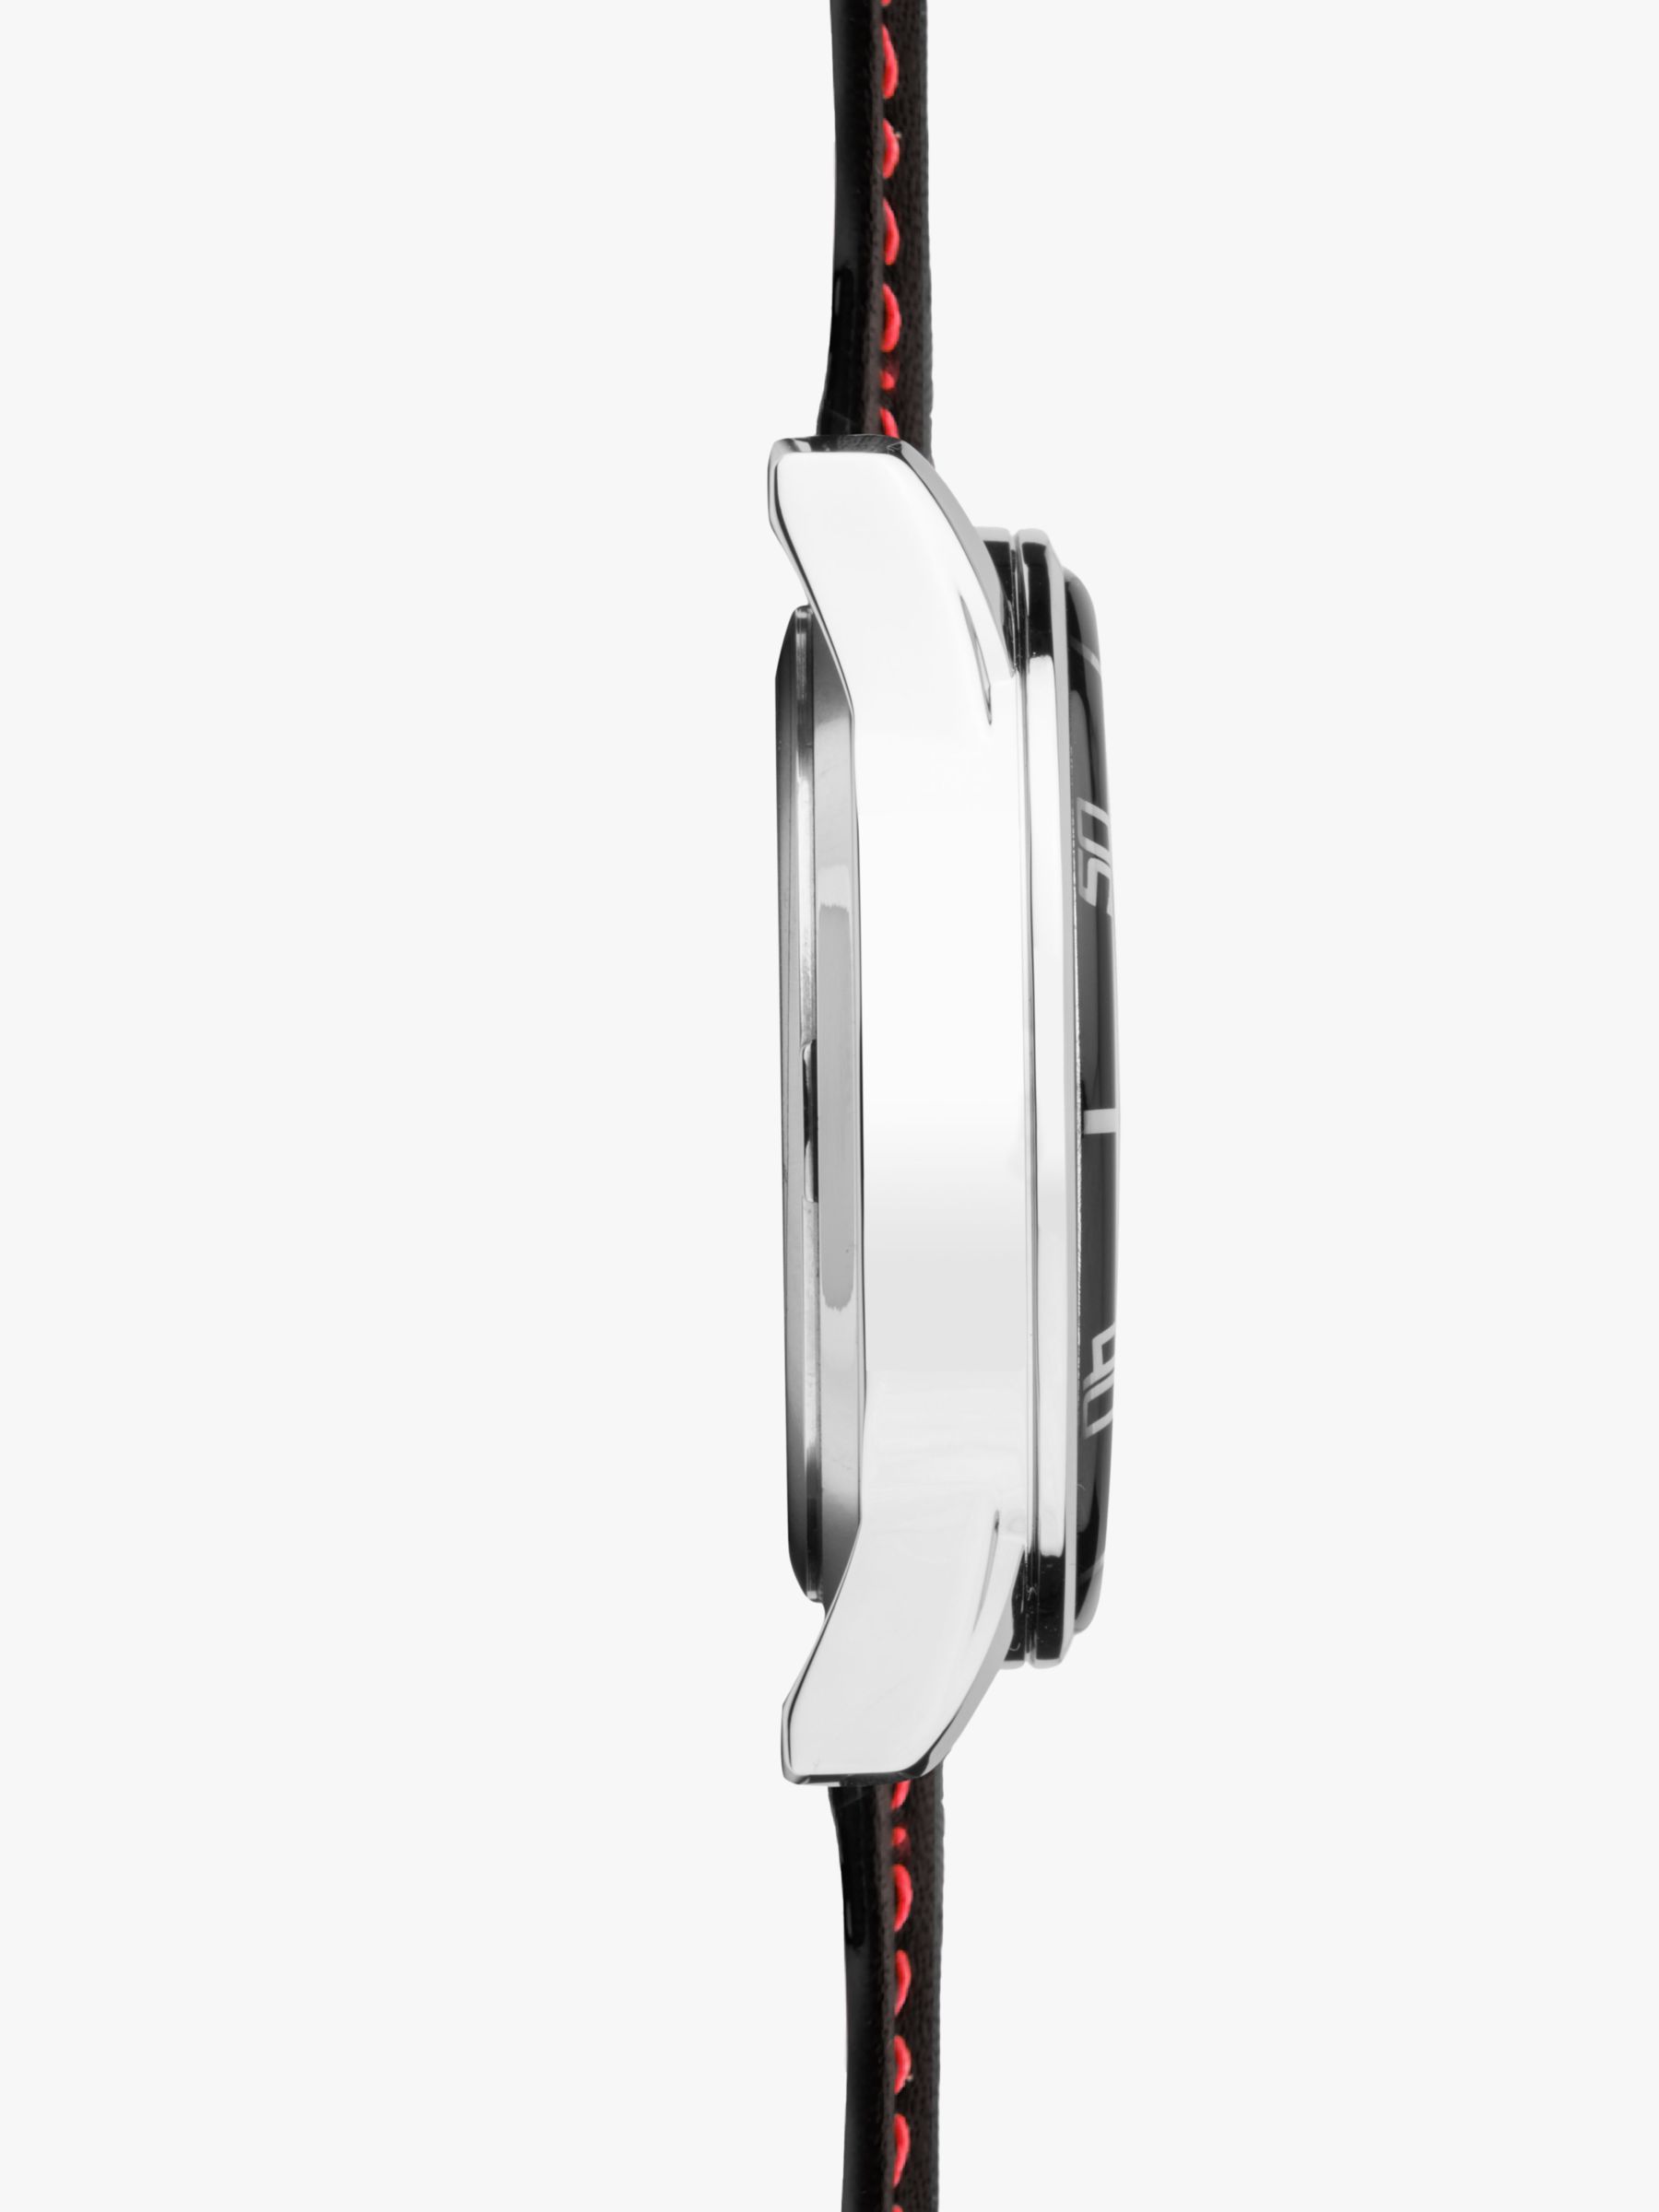 Buy Sekonda 30206 Men's Midnight Chronograph Leather Strap Watch, Black Online at johnlewis.com